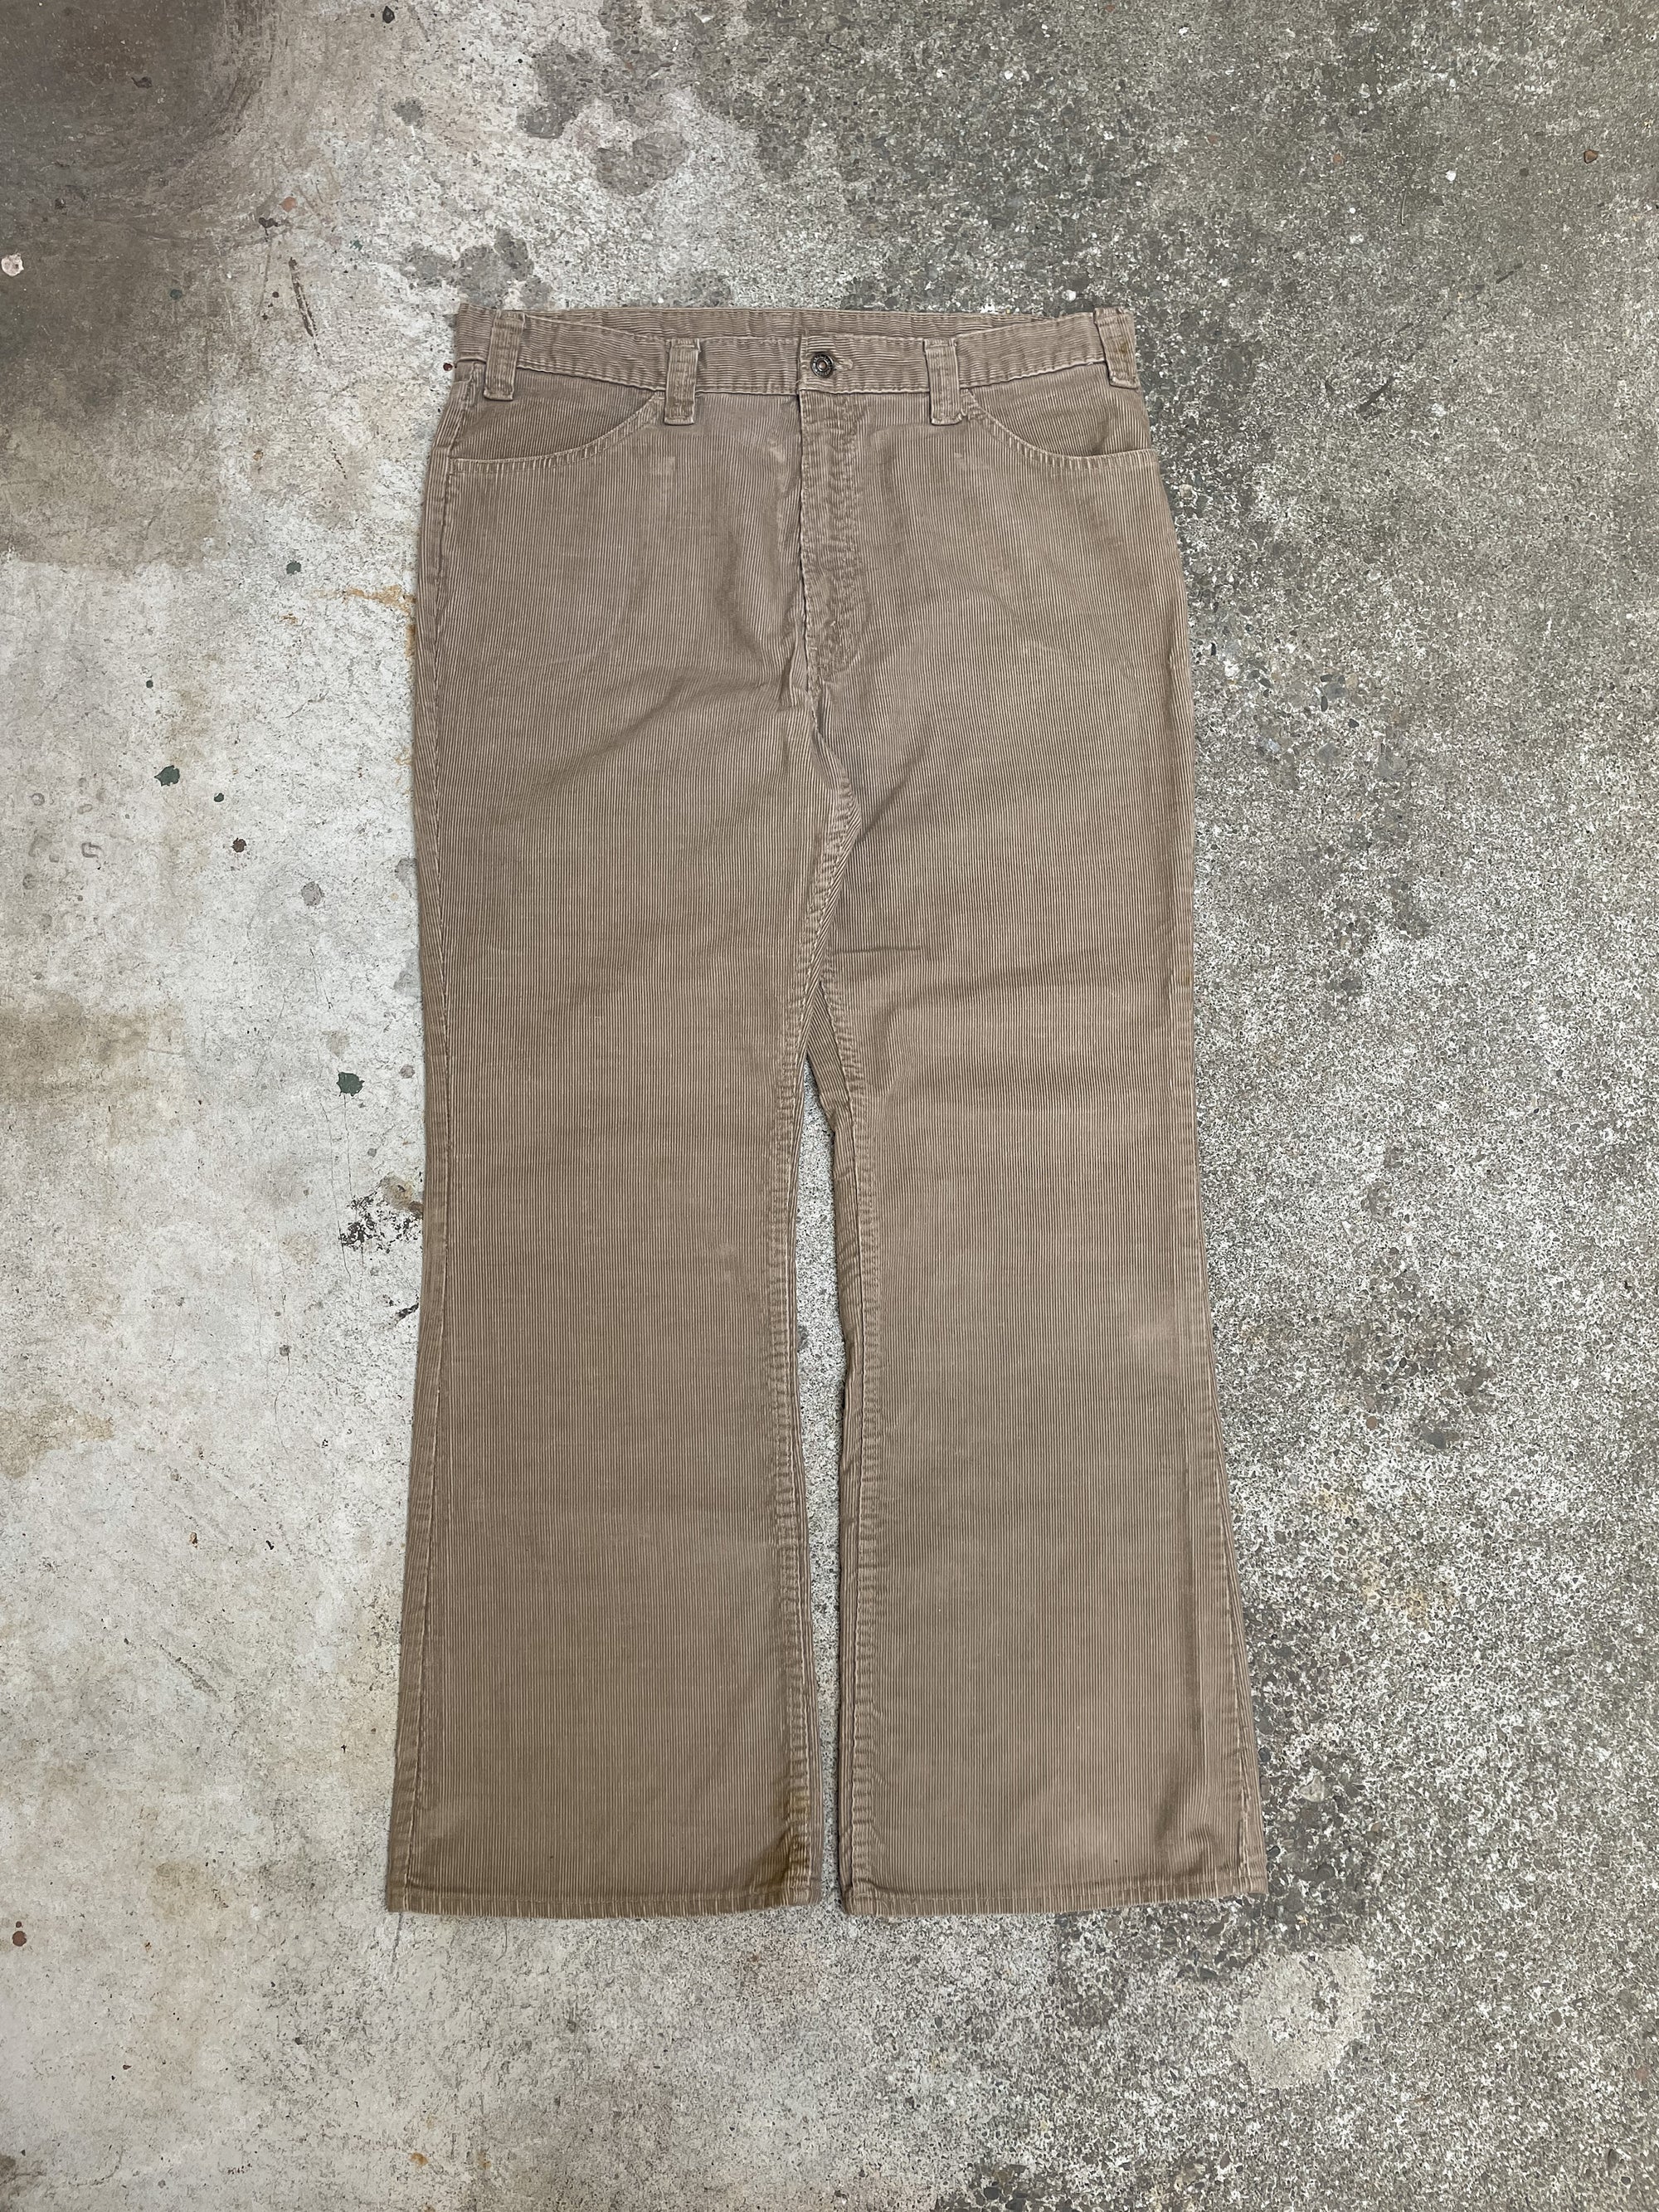 1970s/80s White Tab Levi’s Tan Corduroy Talon Zip Flared Pants (36X29)